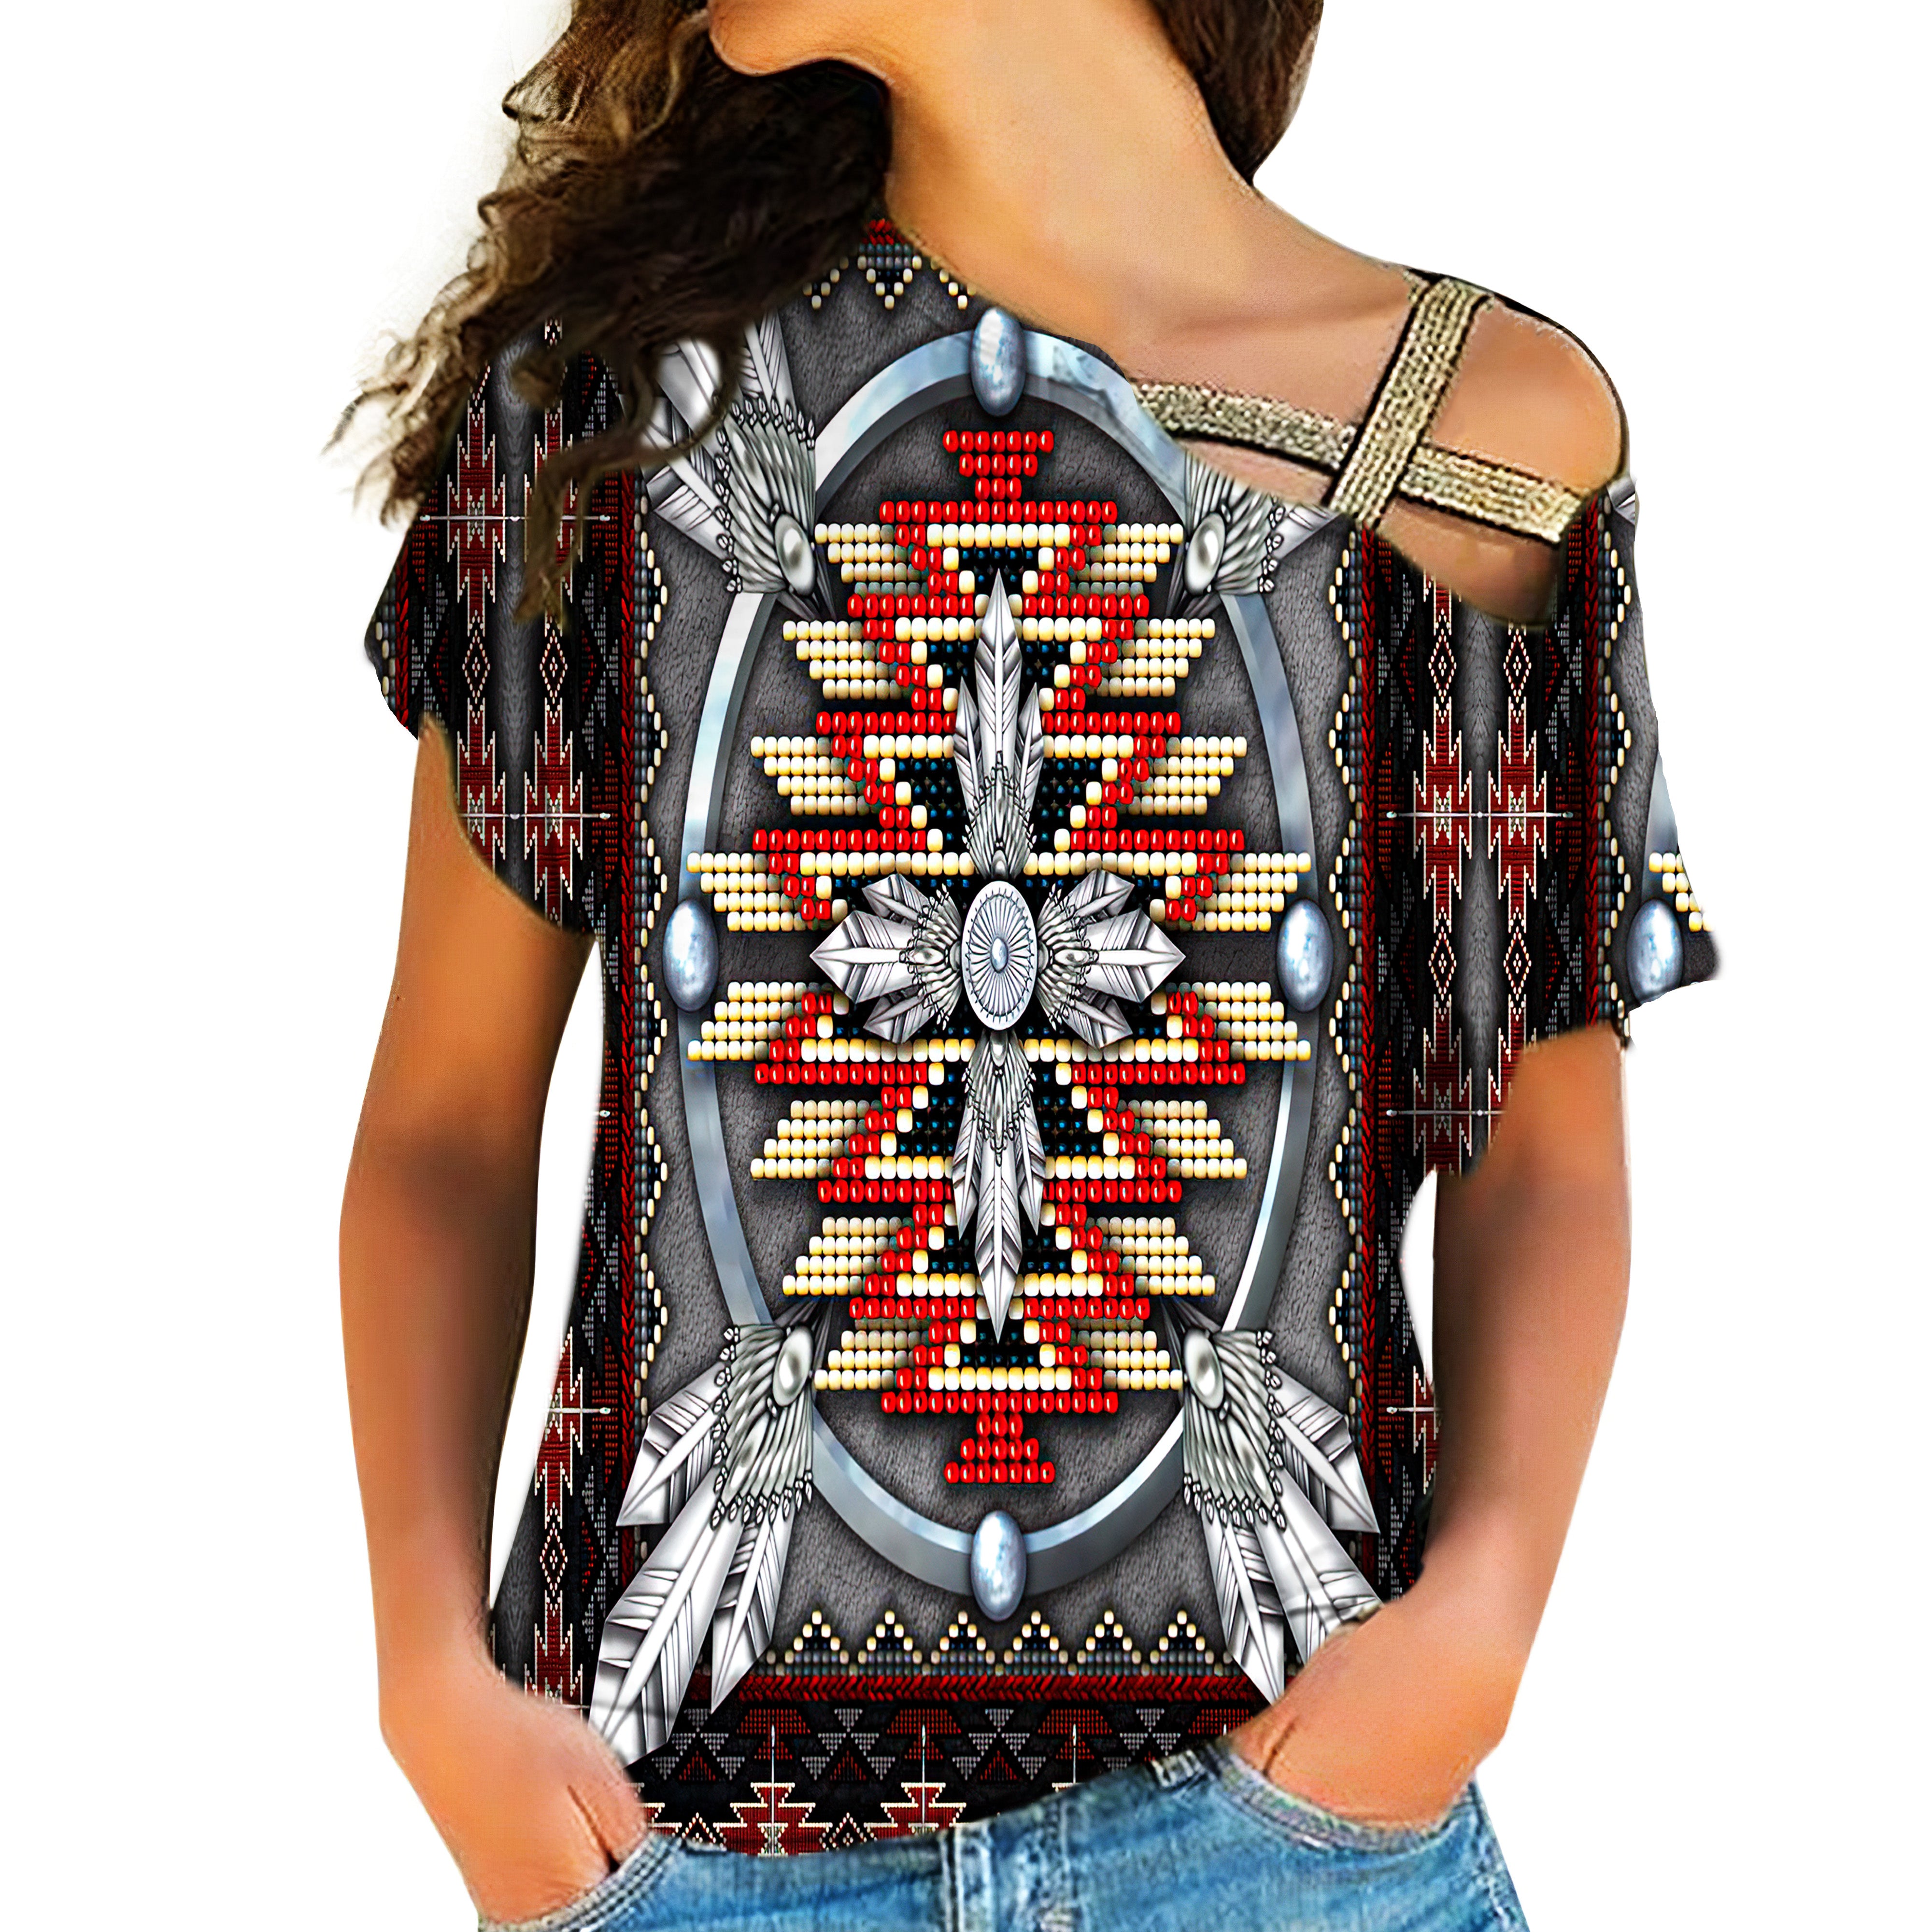 Powwow Store native american cross shoulder shirt 1130